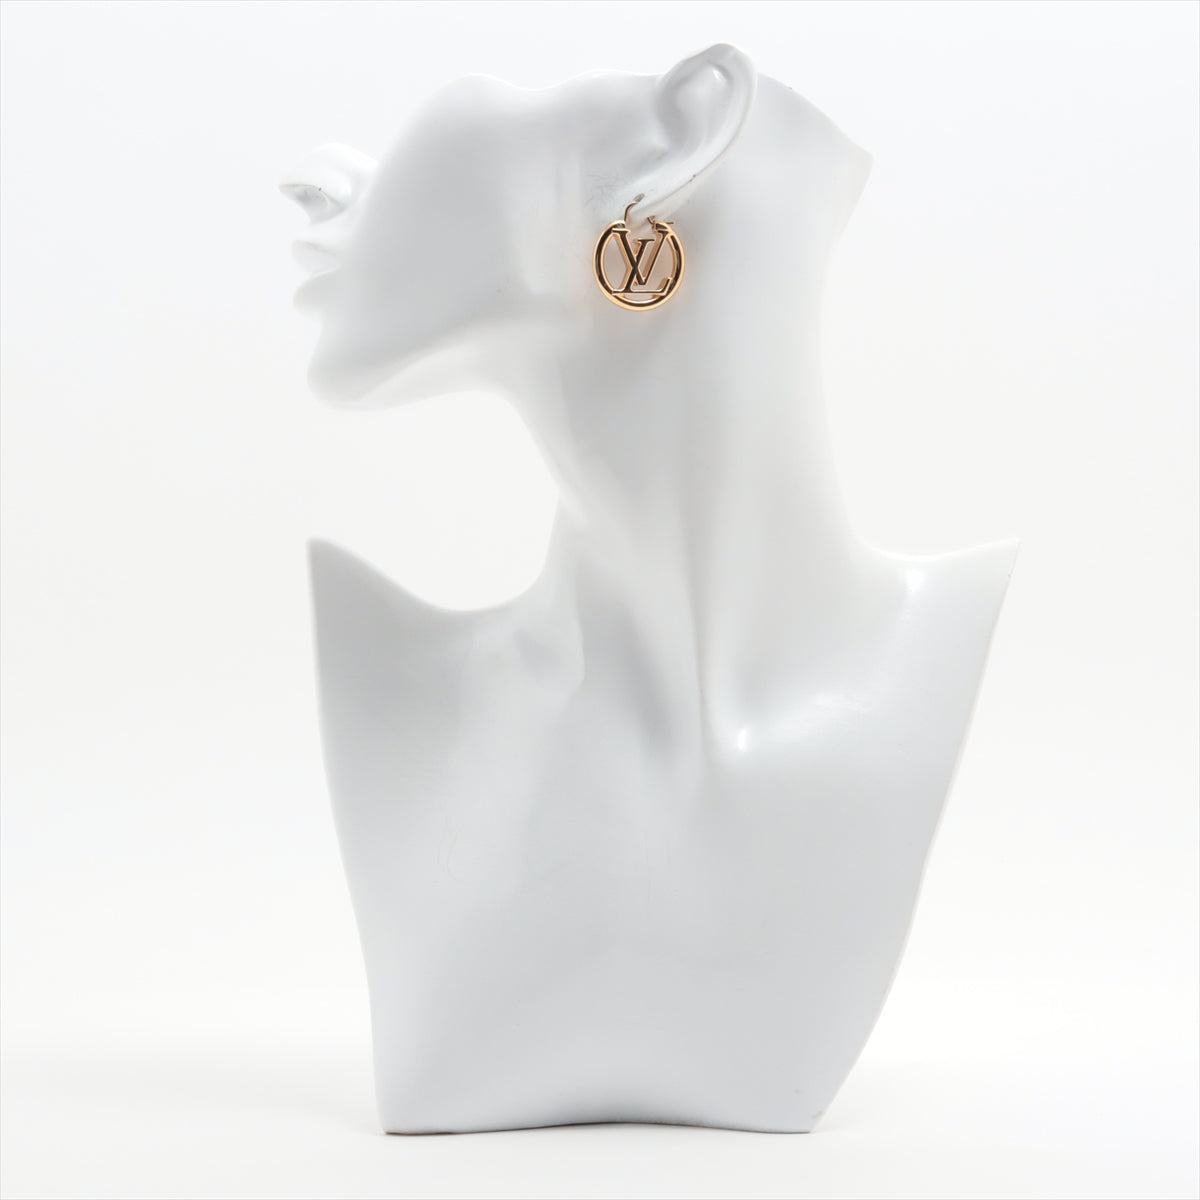 Louis Vuitton M00396 BOOKLE Dreille Louise LE2282 Piercing jewelry (for both ears) GP Gold